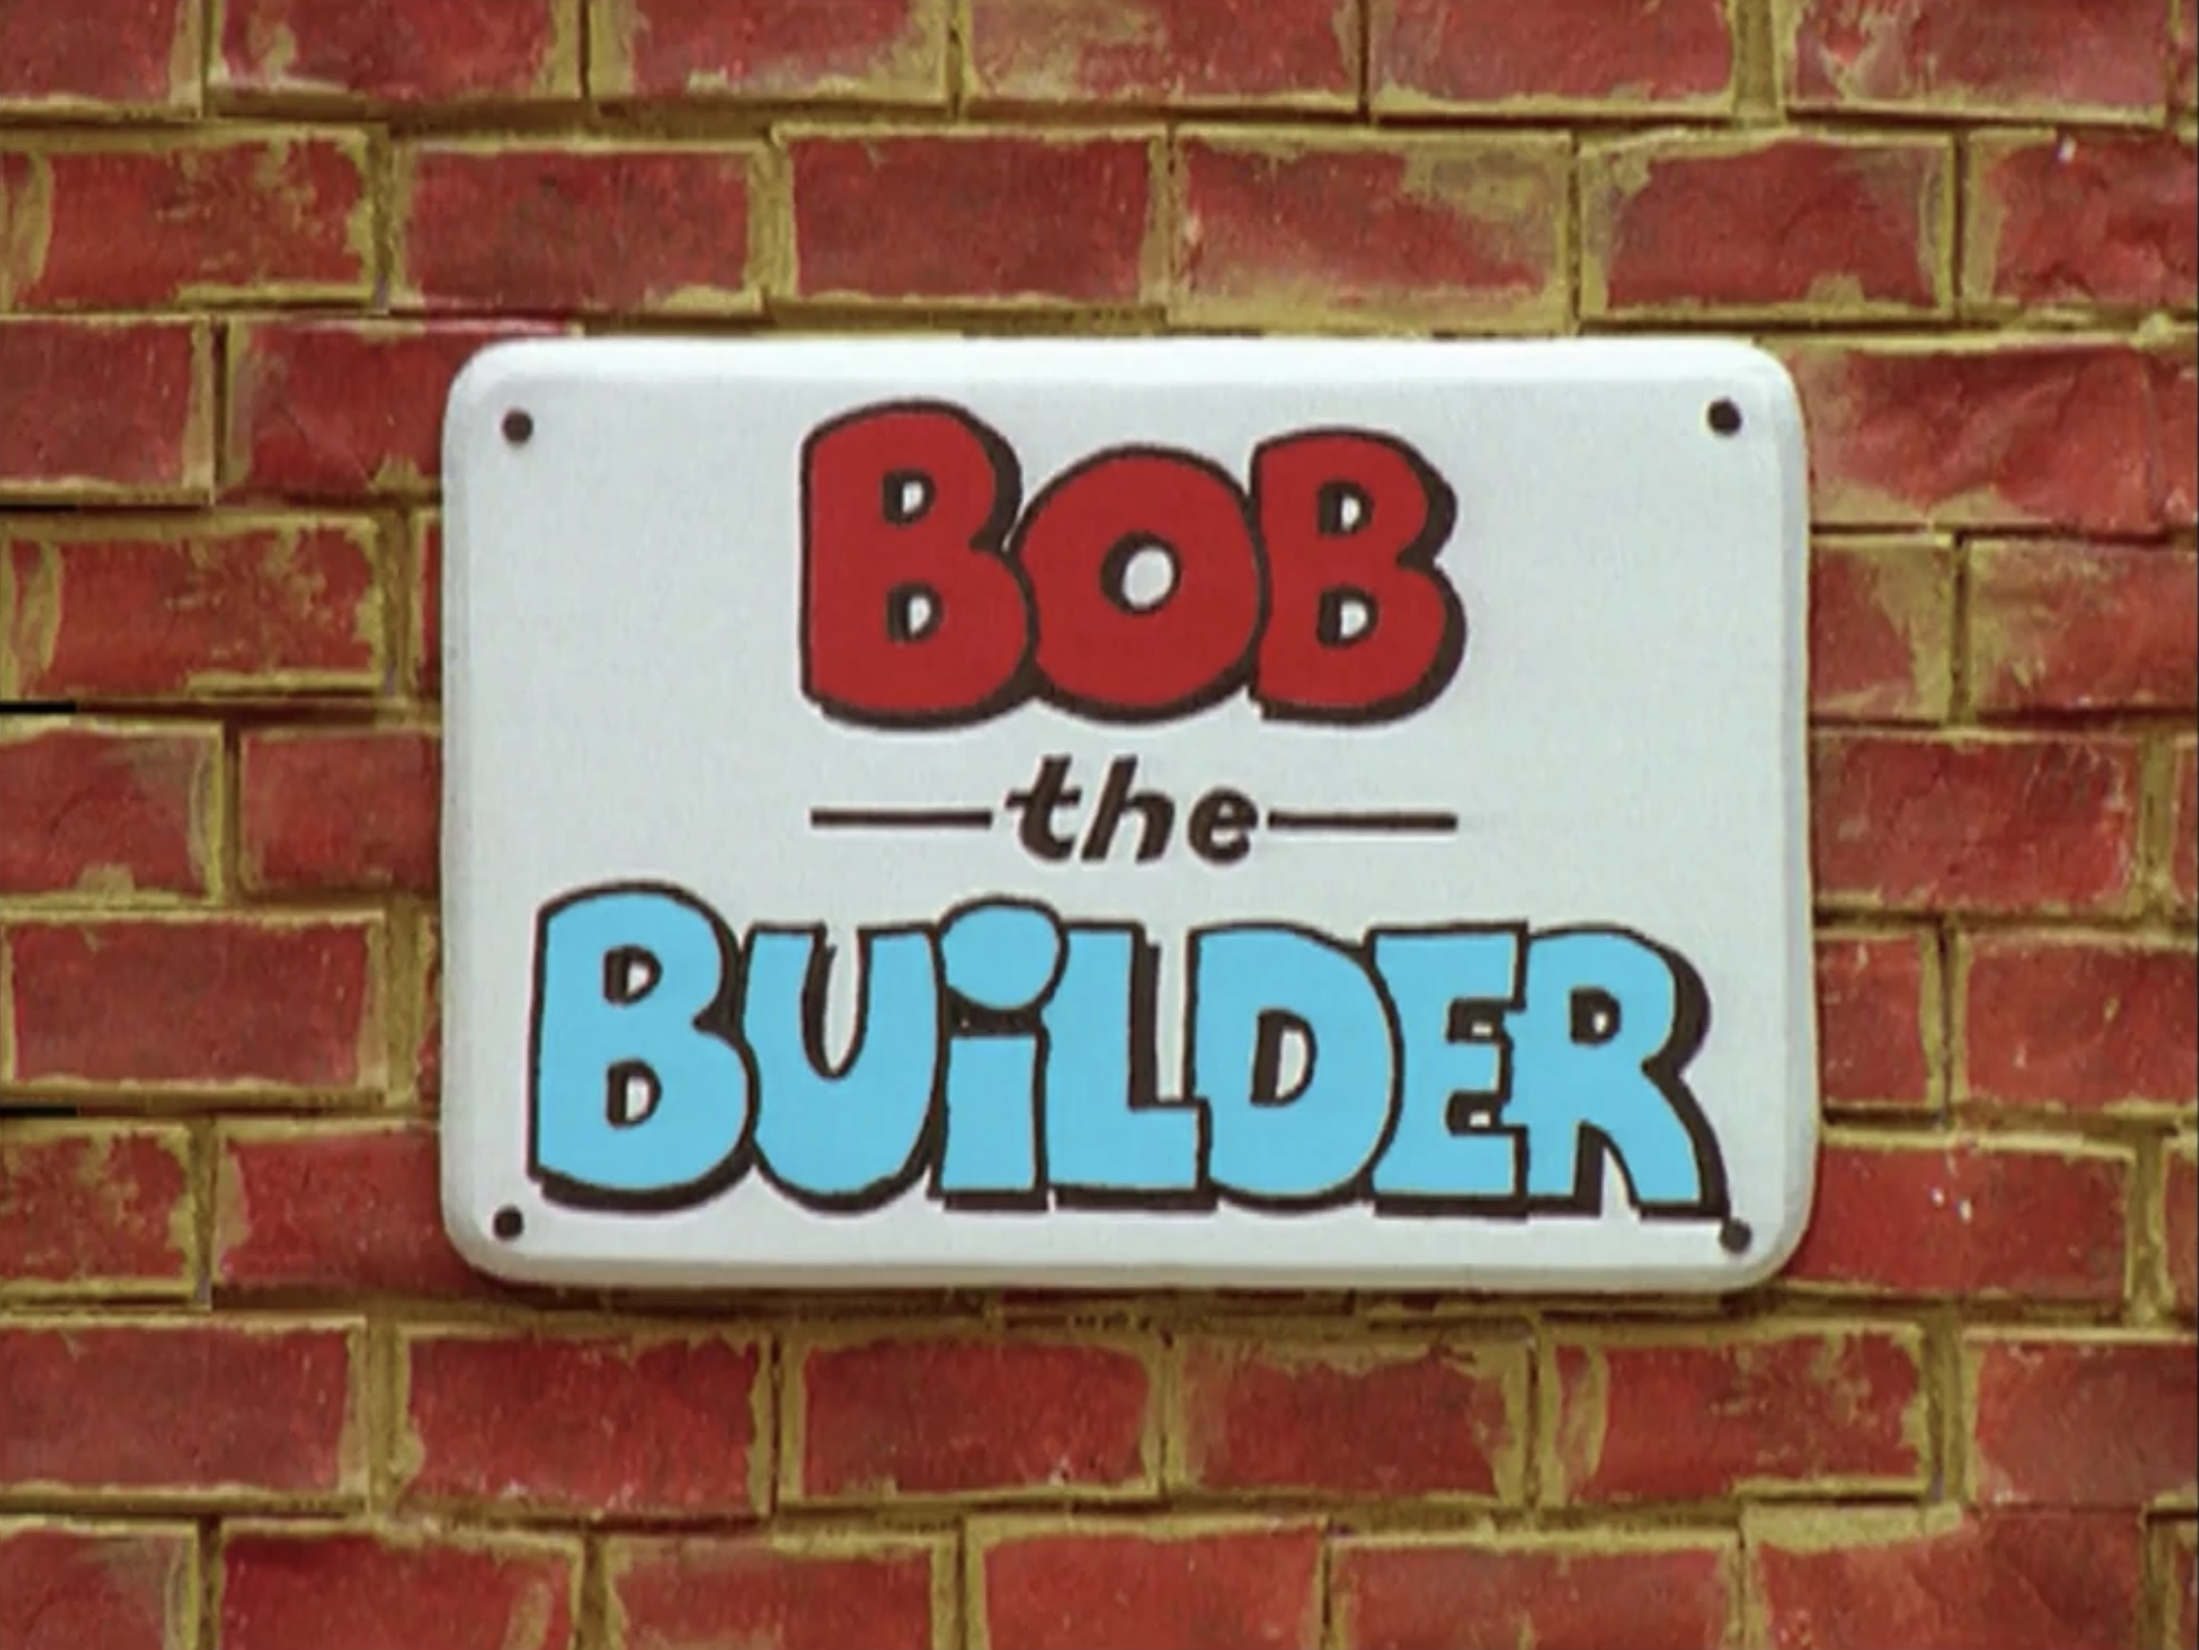 Bob the builder pilot.jpeg